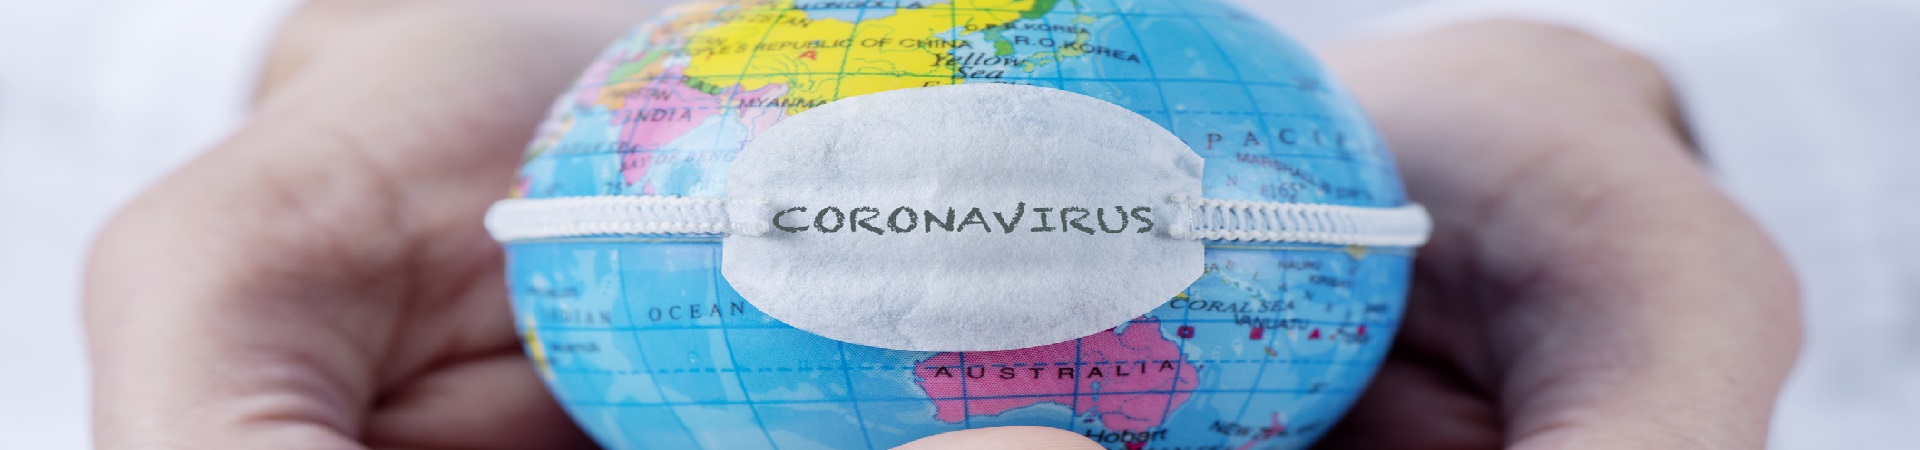 preventie-coronavirus-3.jpg